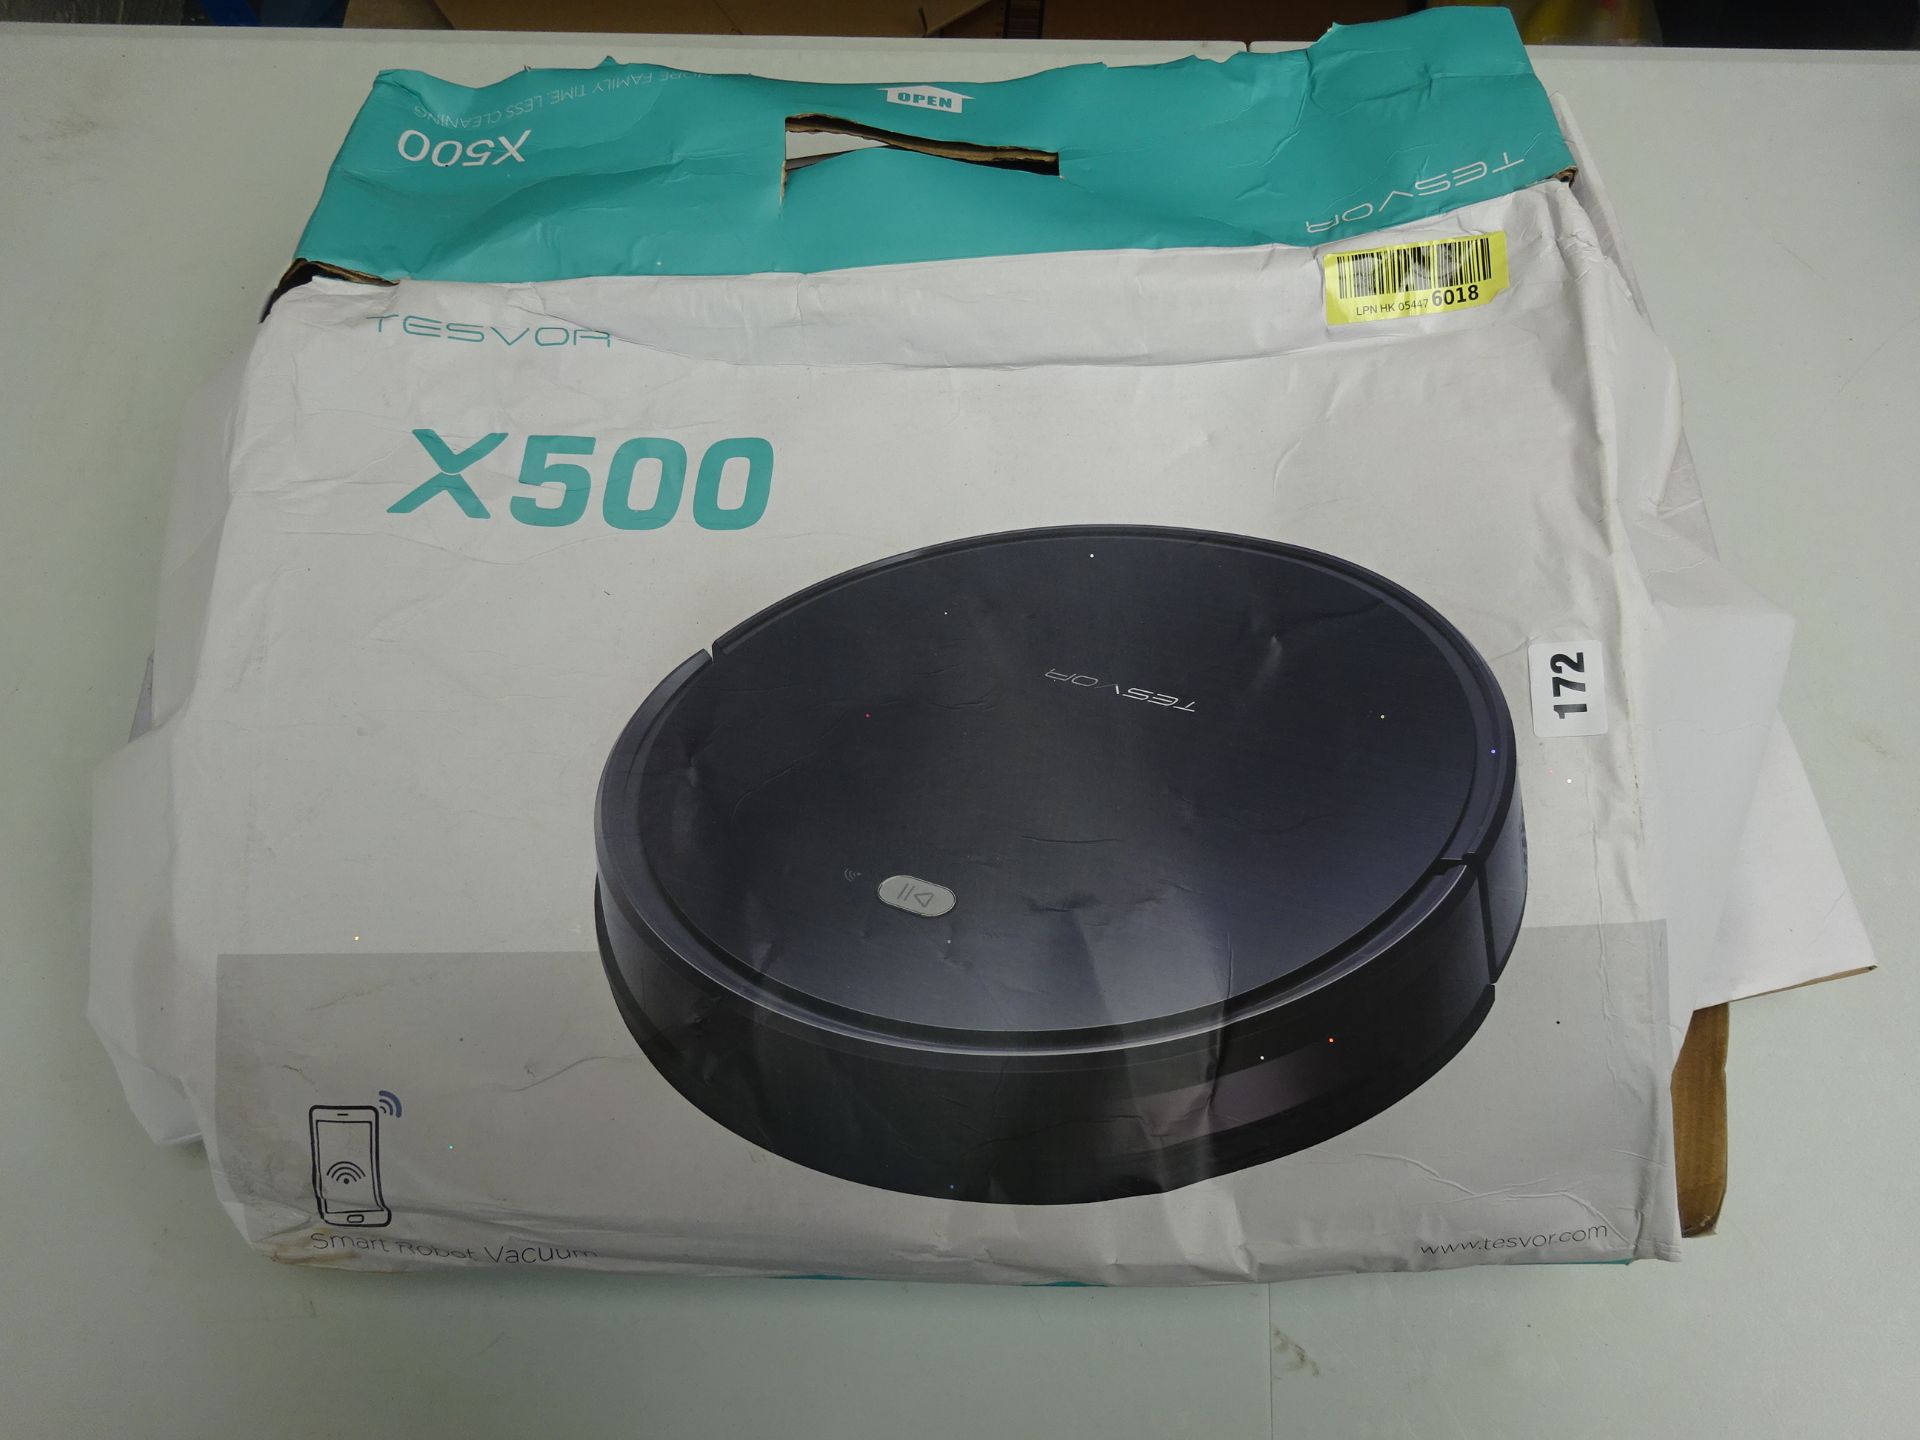 Tesvor X500 Vacuum Robot Cleaner Smart Vacuum - RRP £89.99 - Image 2 of 3